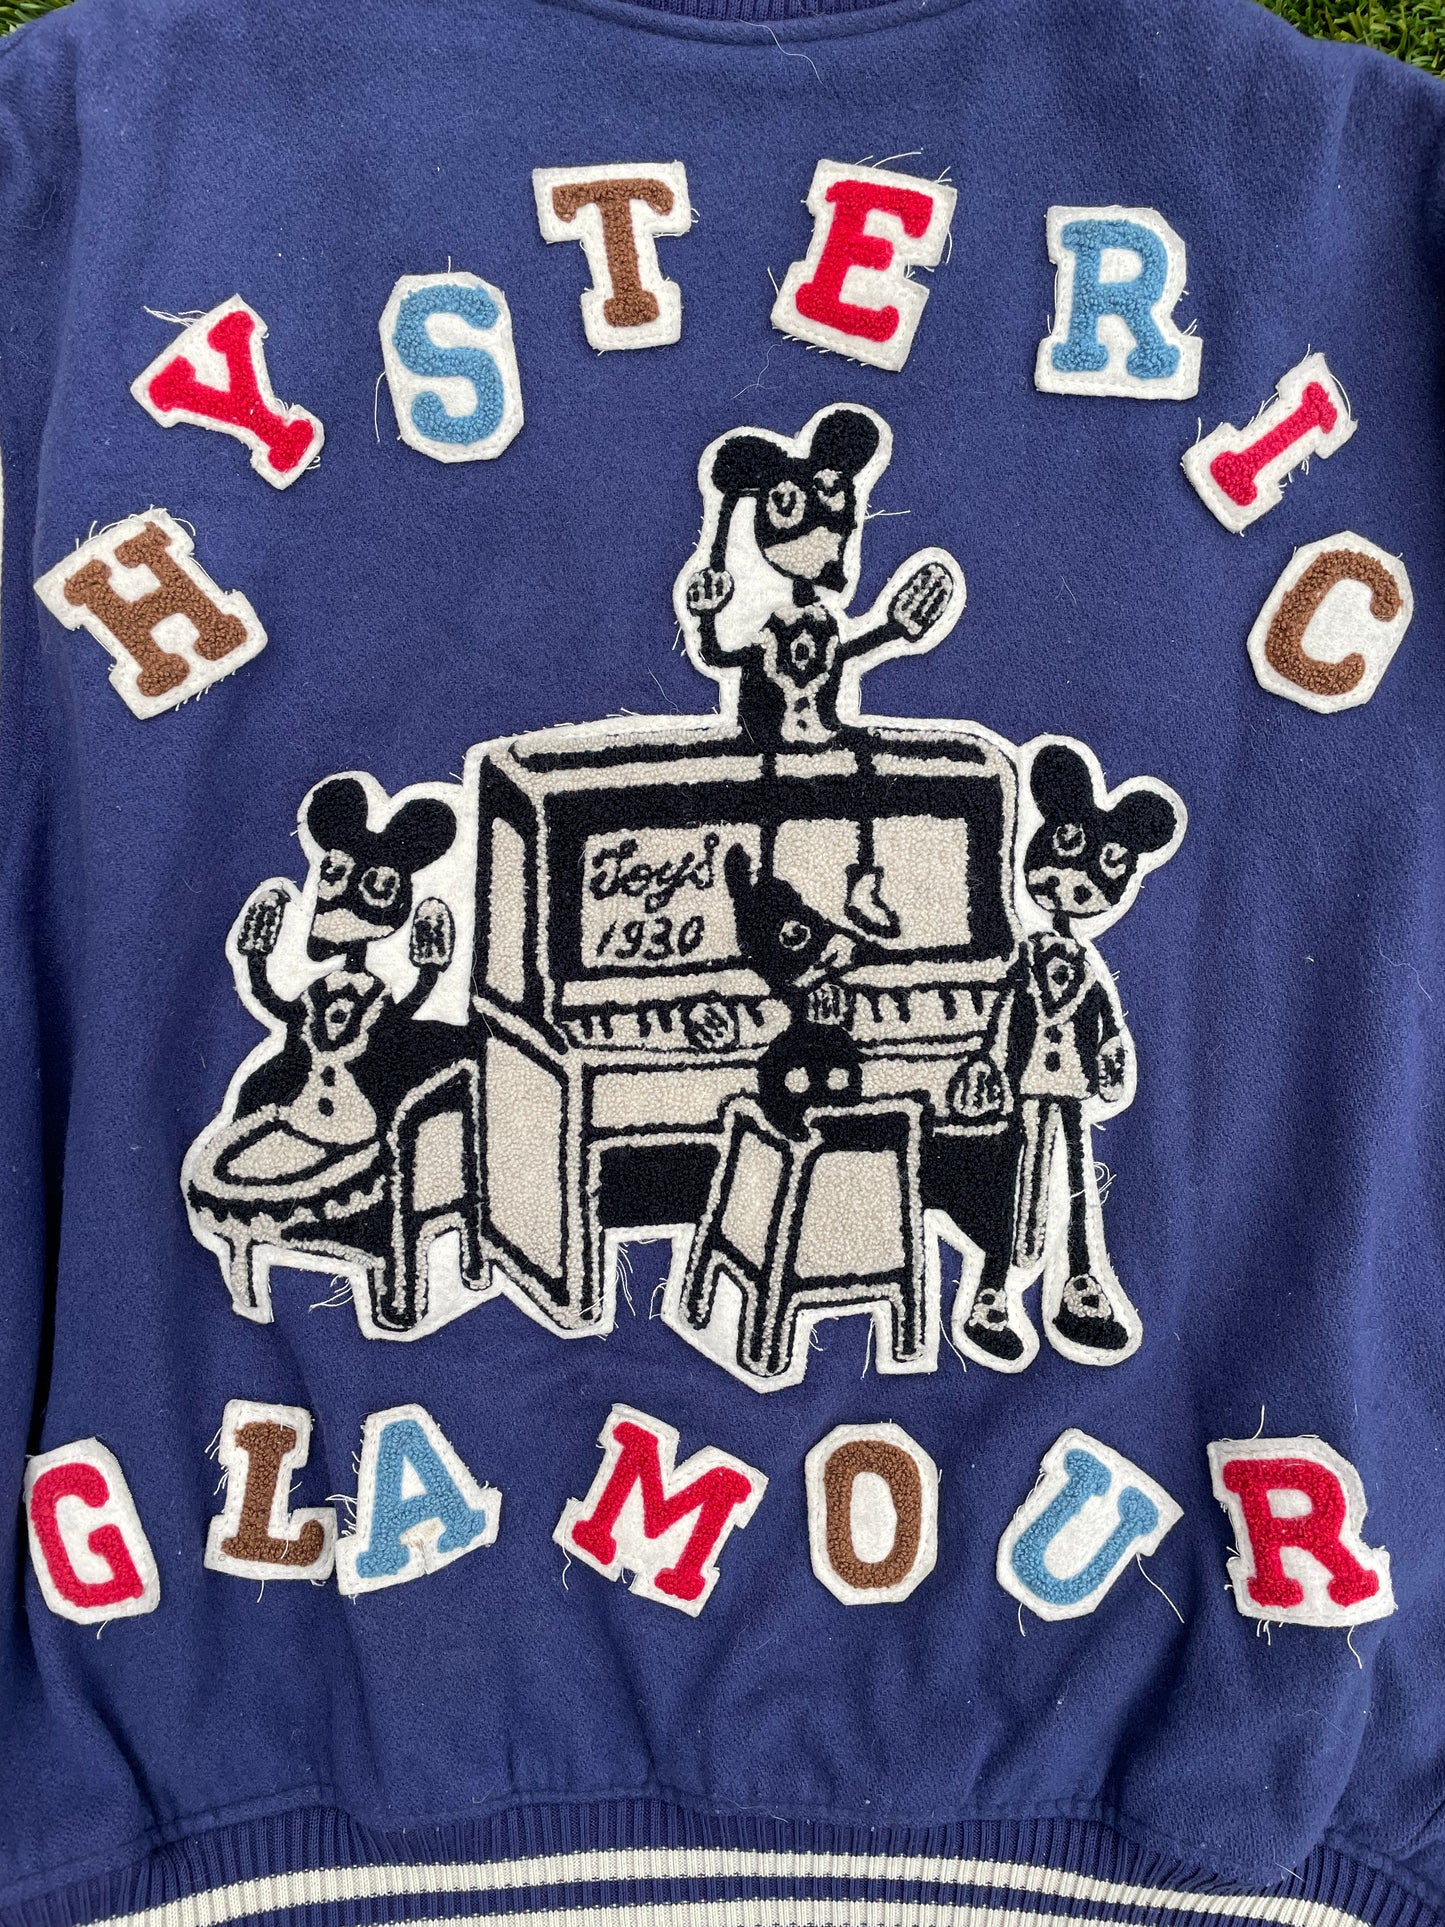 1980s Hysteric Glamour Louis Marx ‘Toys’ Varsity Jacket